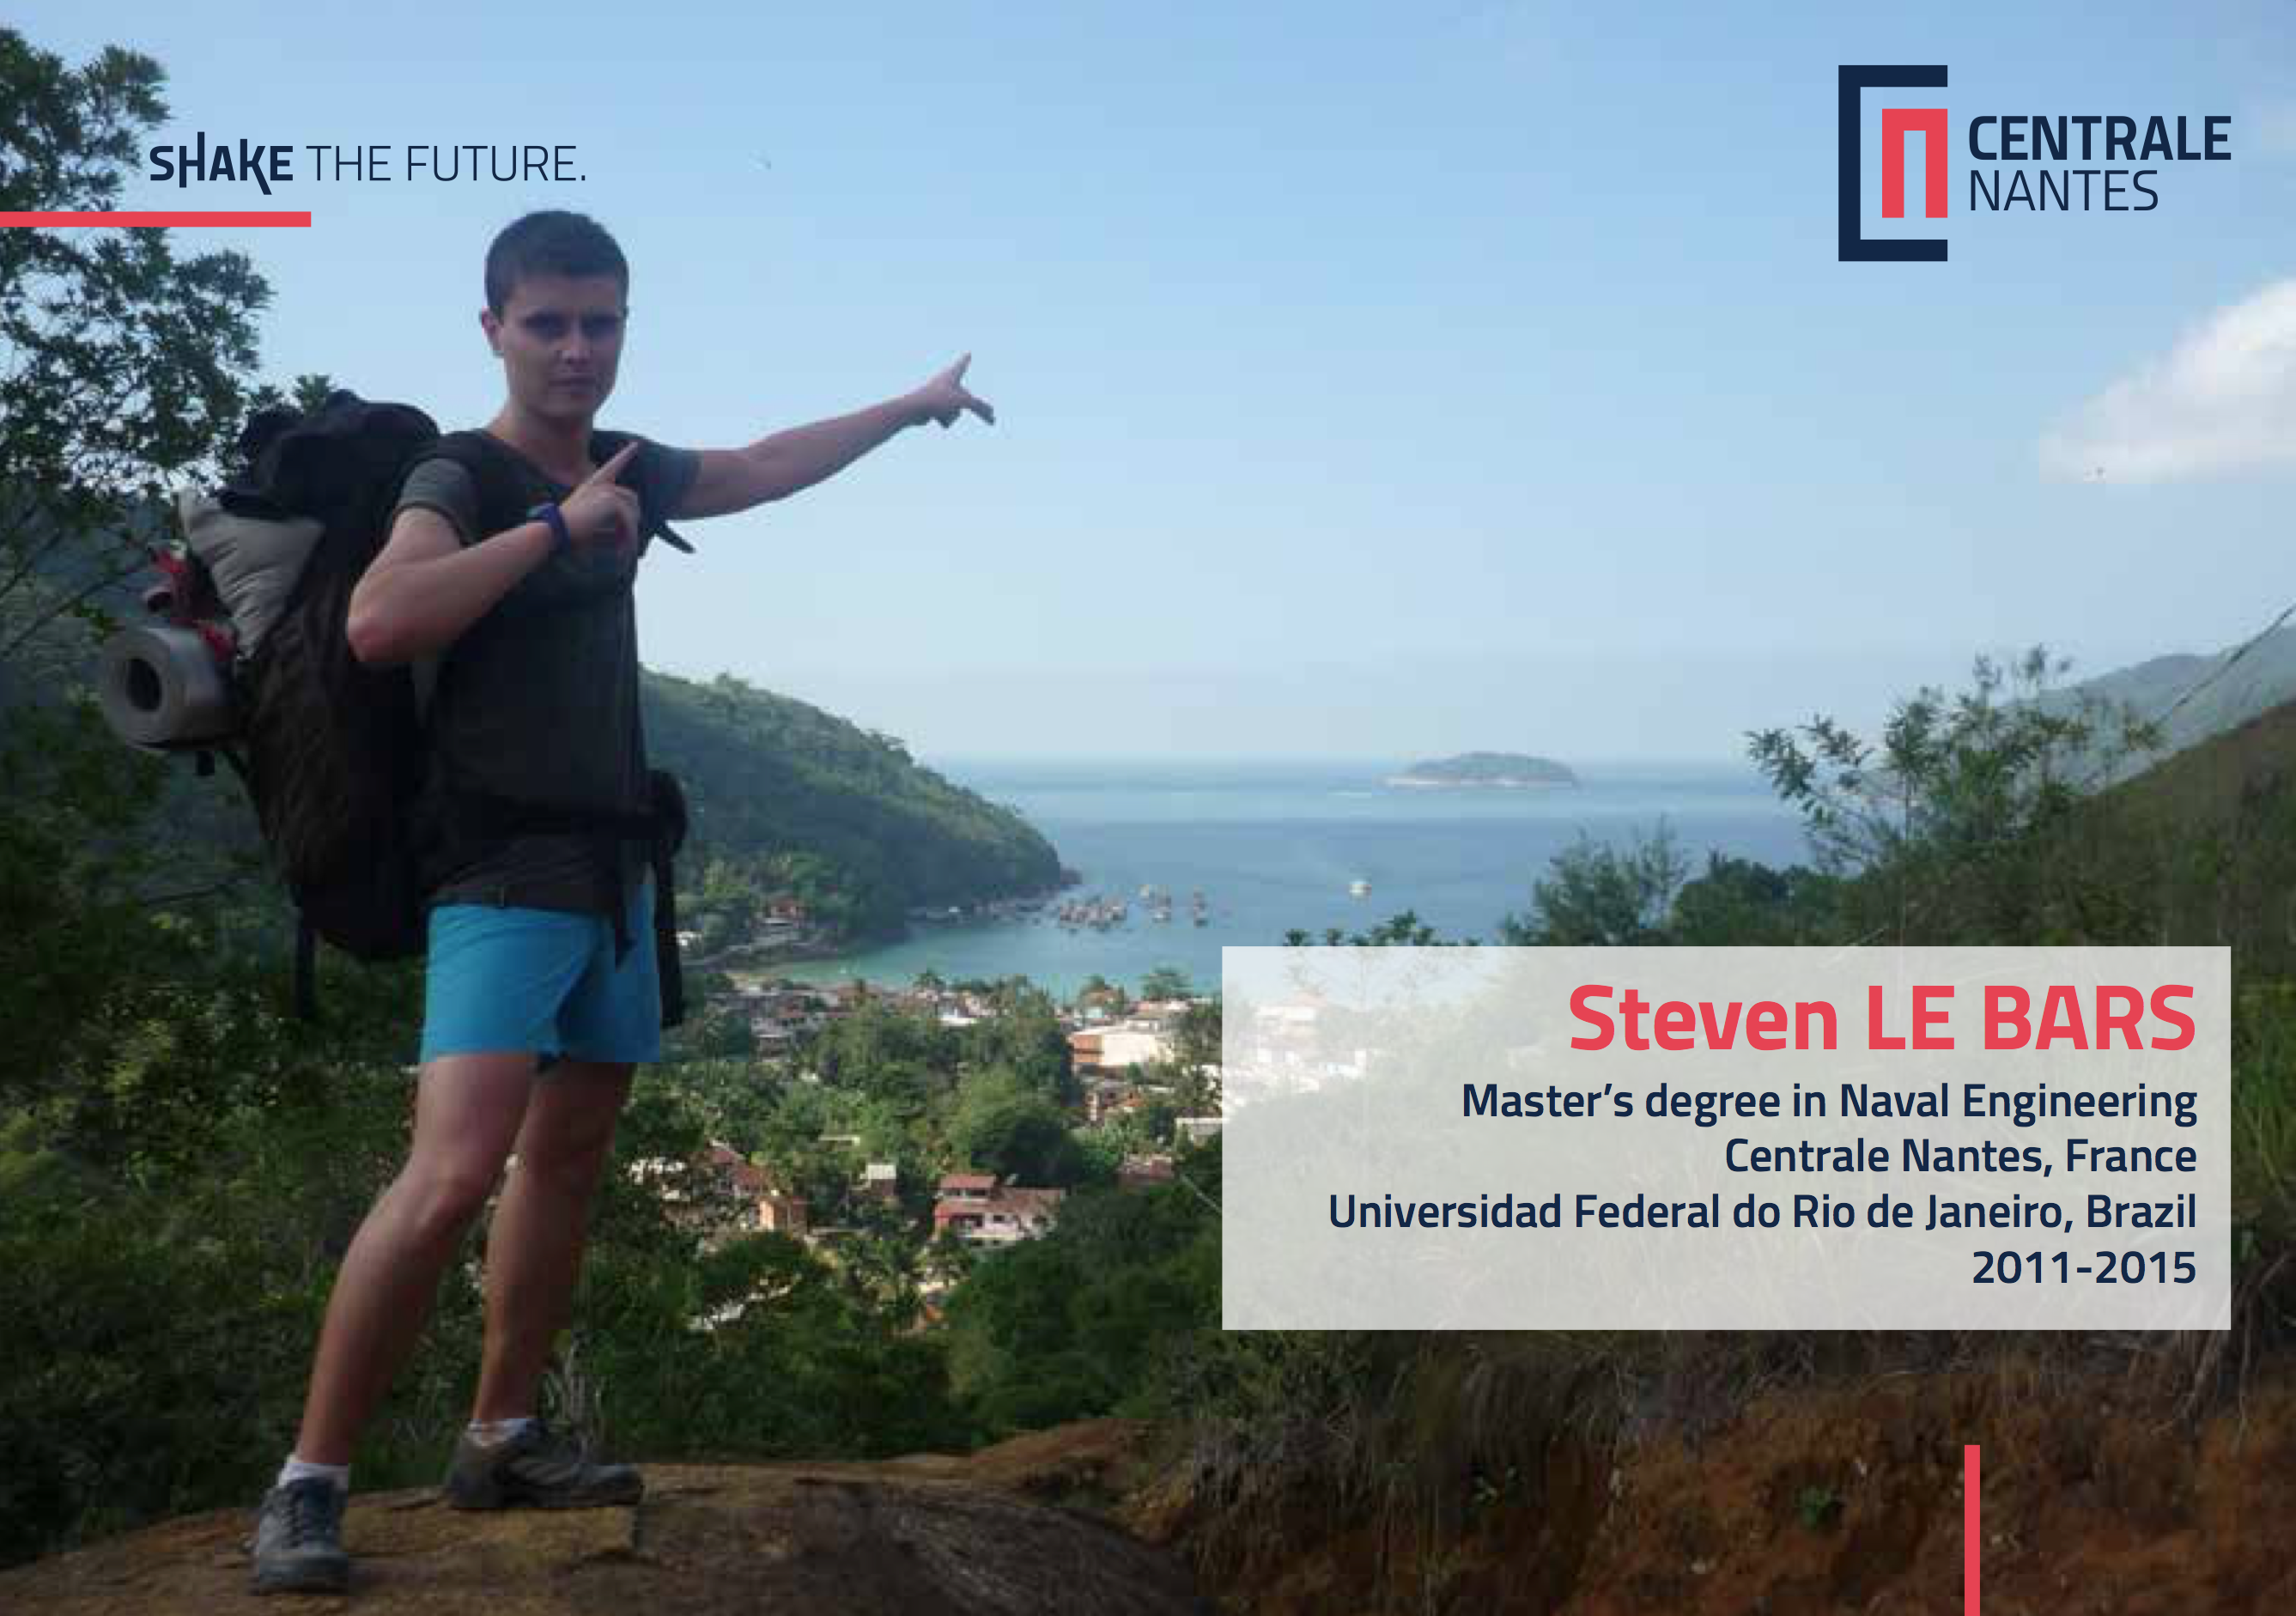 Steven Le Bards, Master's degree in Naval Engineering Centrale Nantes, France, Universidad Federal do Rio de Janeiro, Brazil, 2011-2015